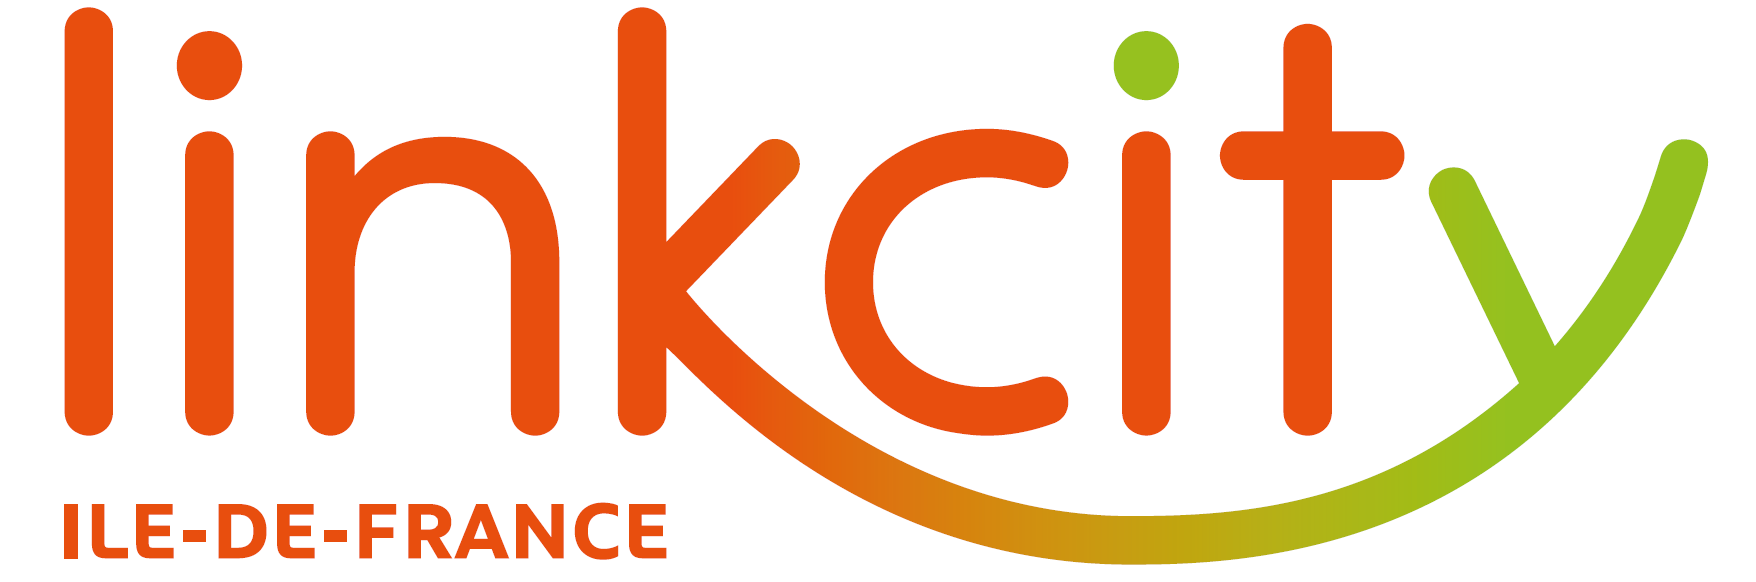 Le logo de Linkcity